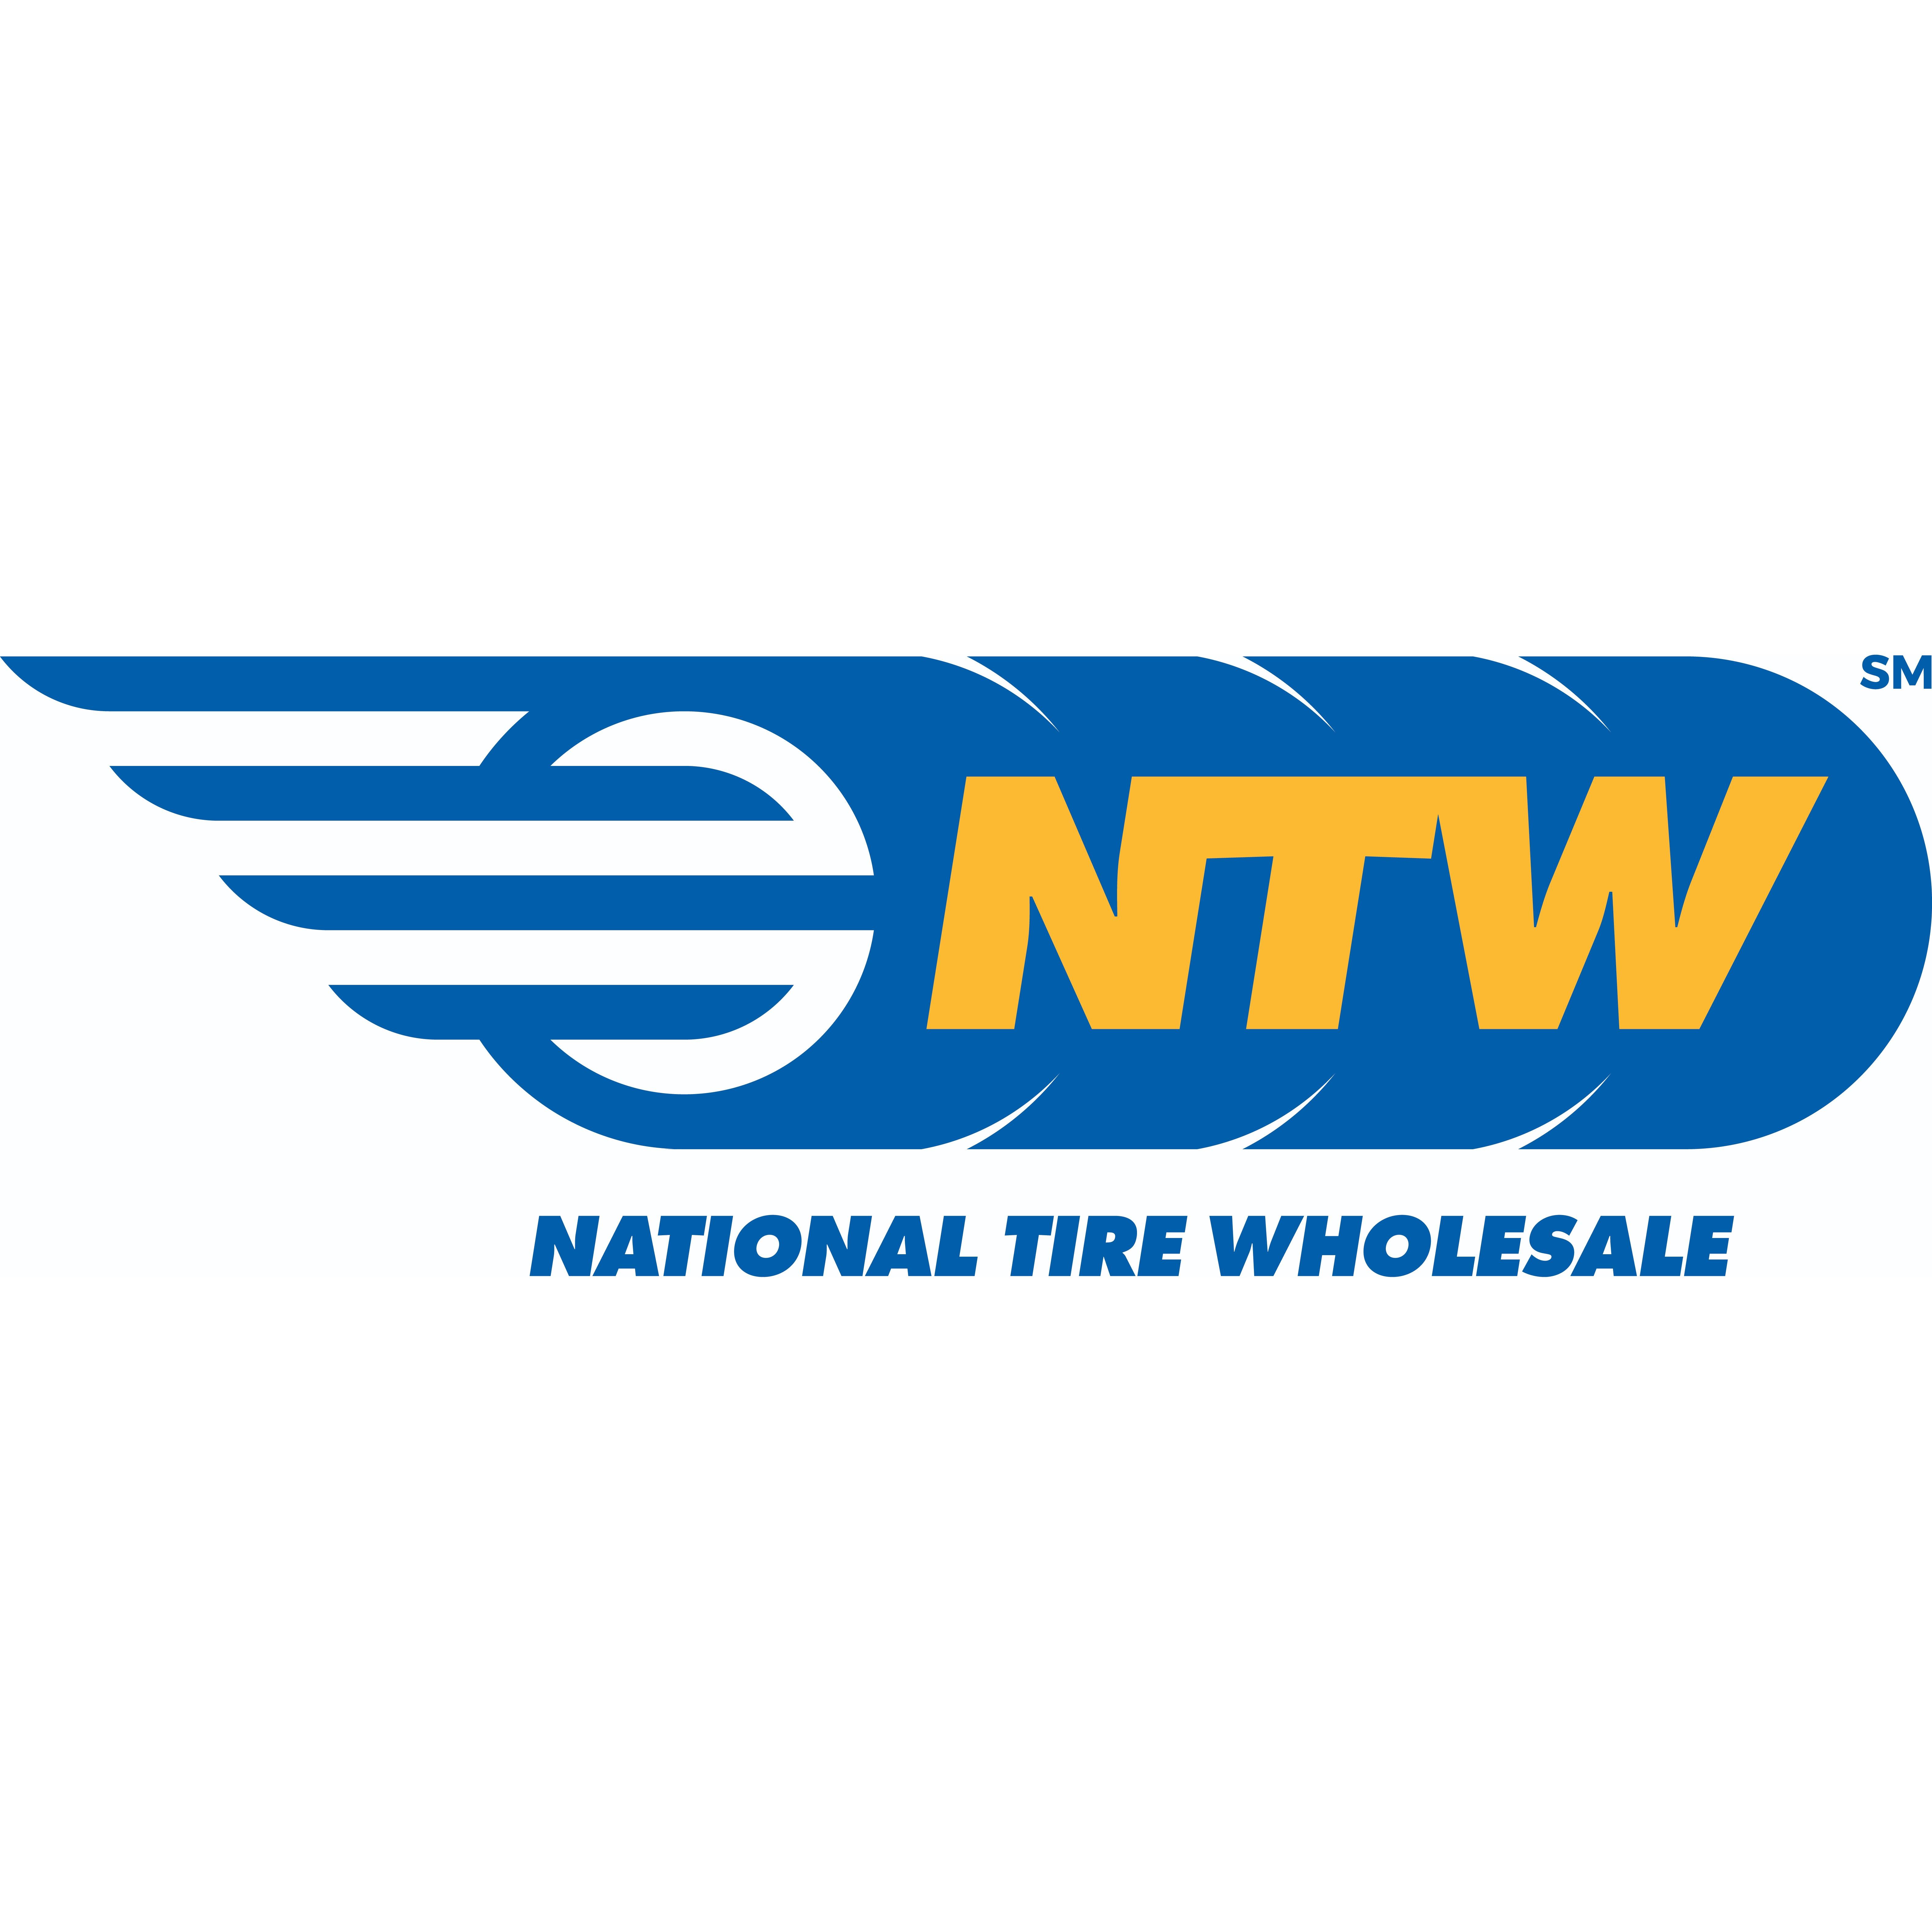 NTW - National Tire Wholesale - Albany, NY 12205 - (855)273-0257 | ShowMeLocal.com